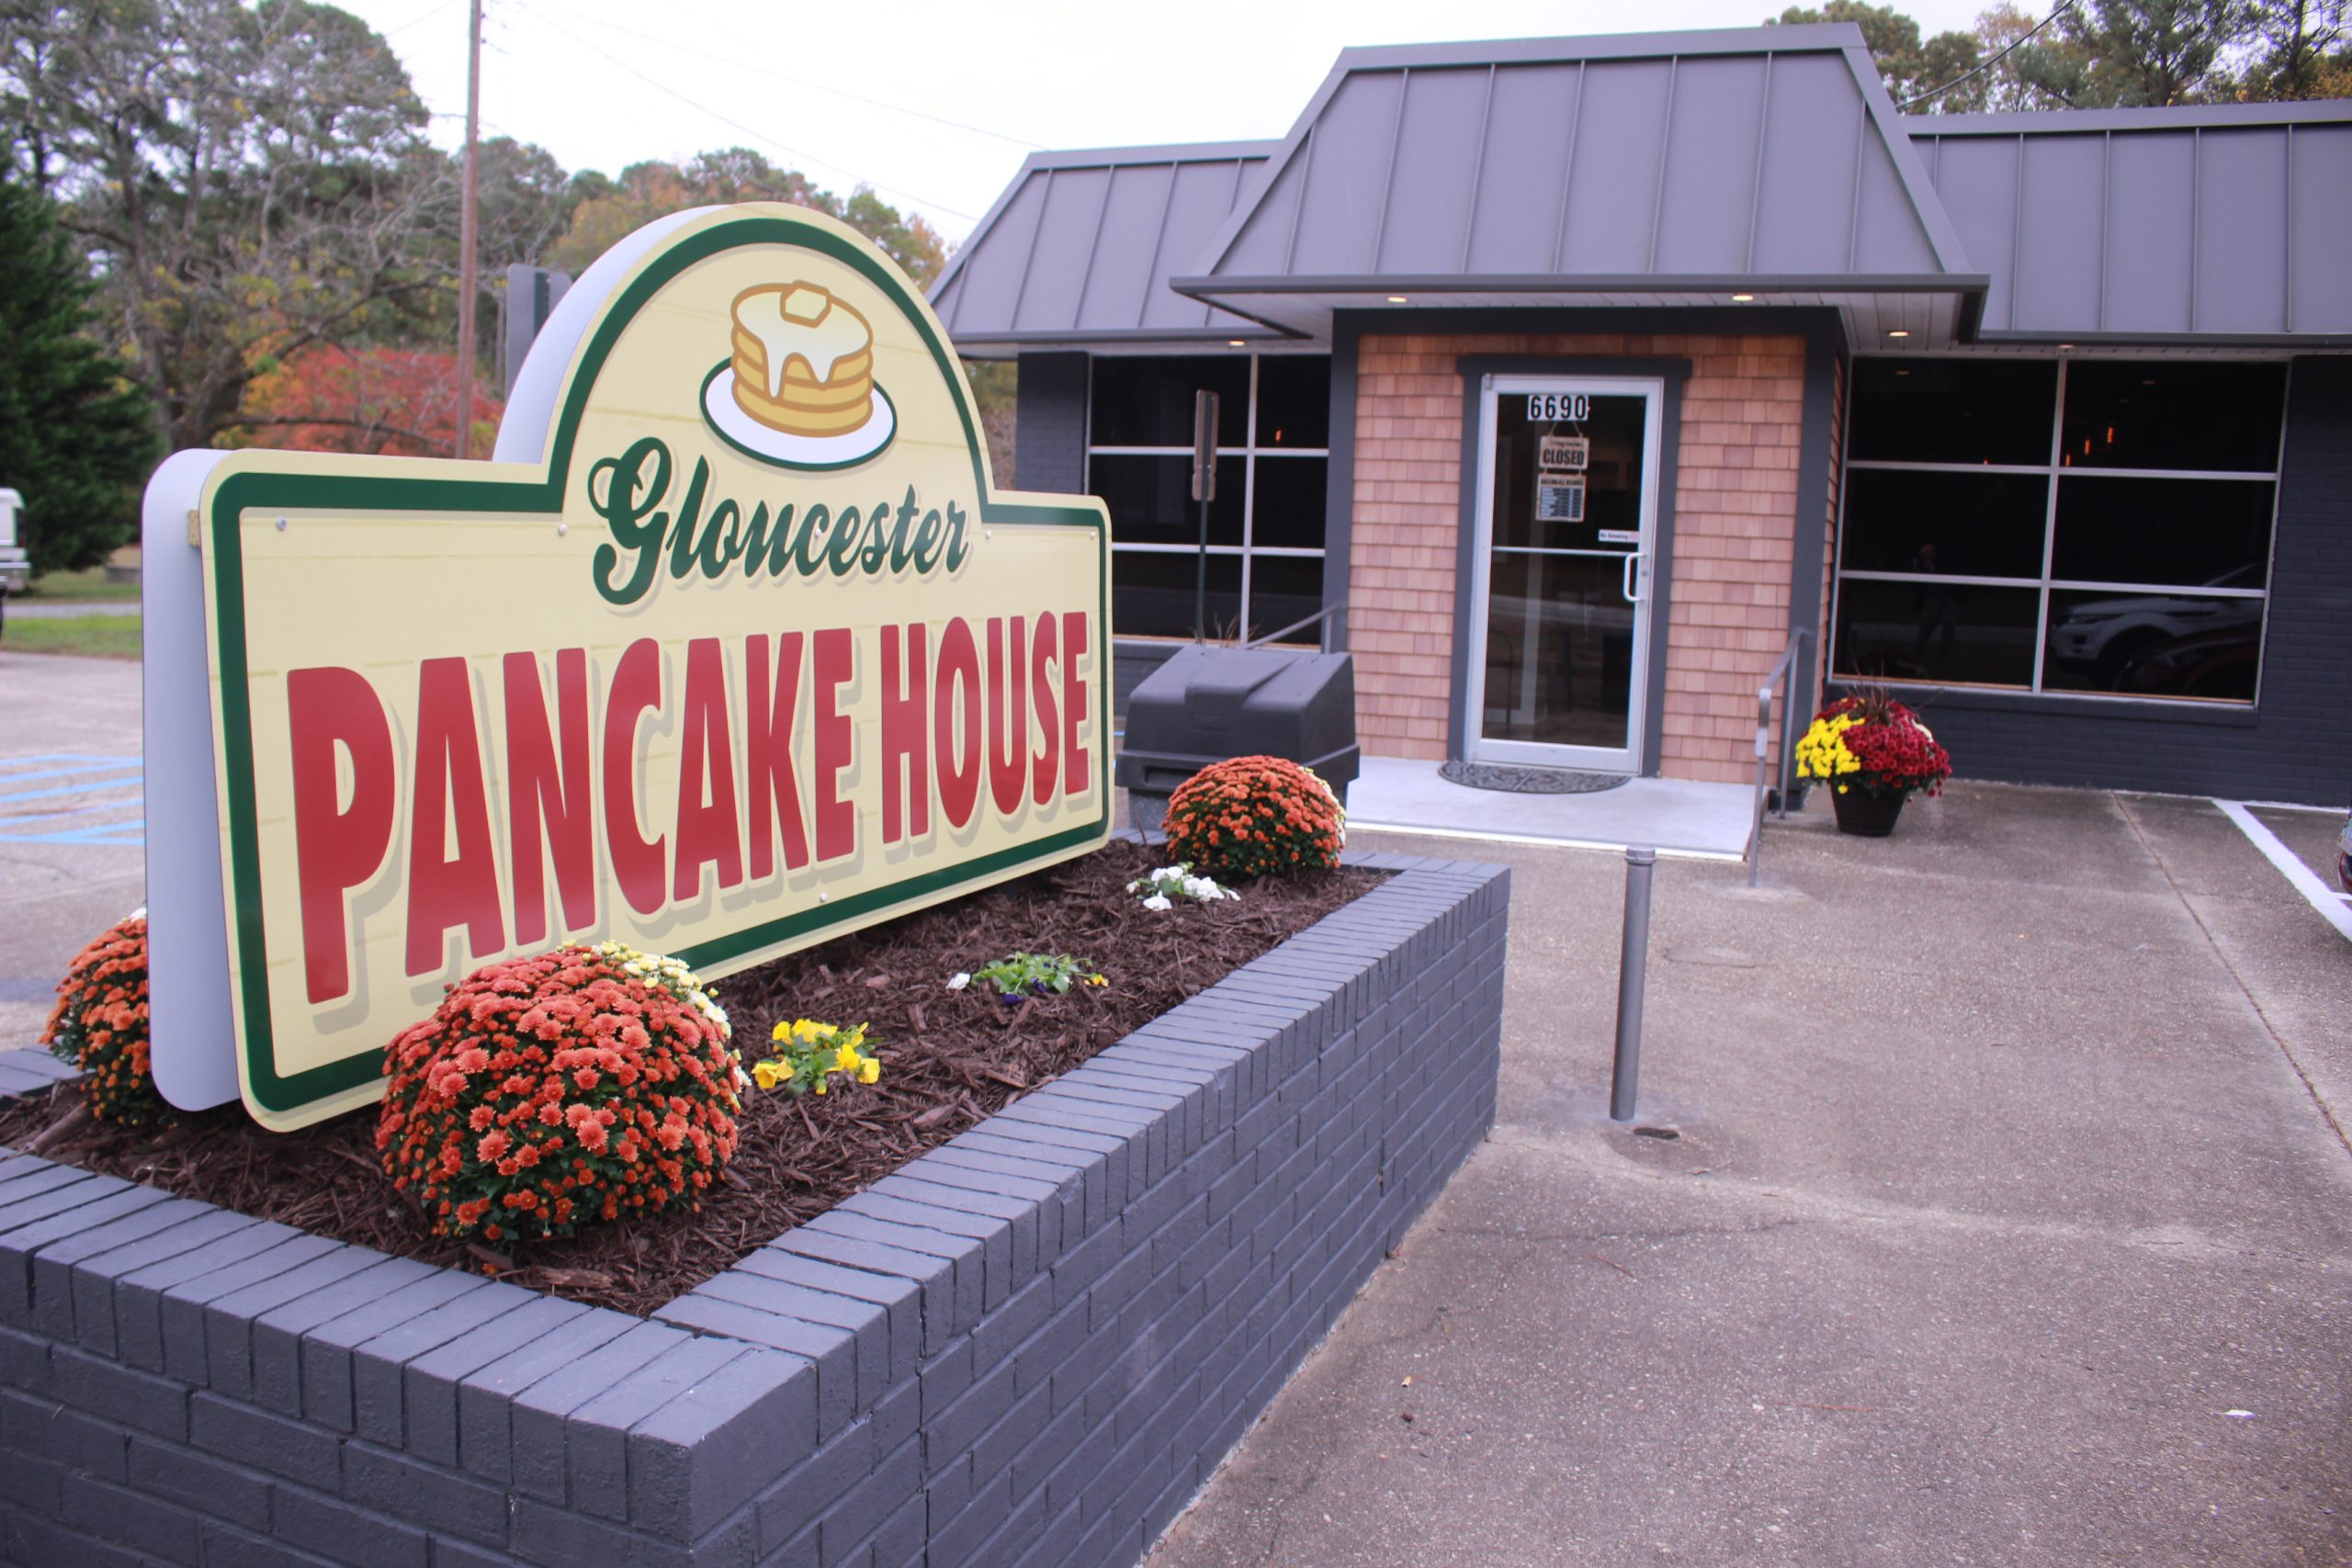 Business Pancake House Scaled 